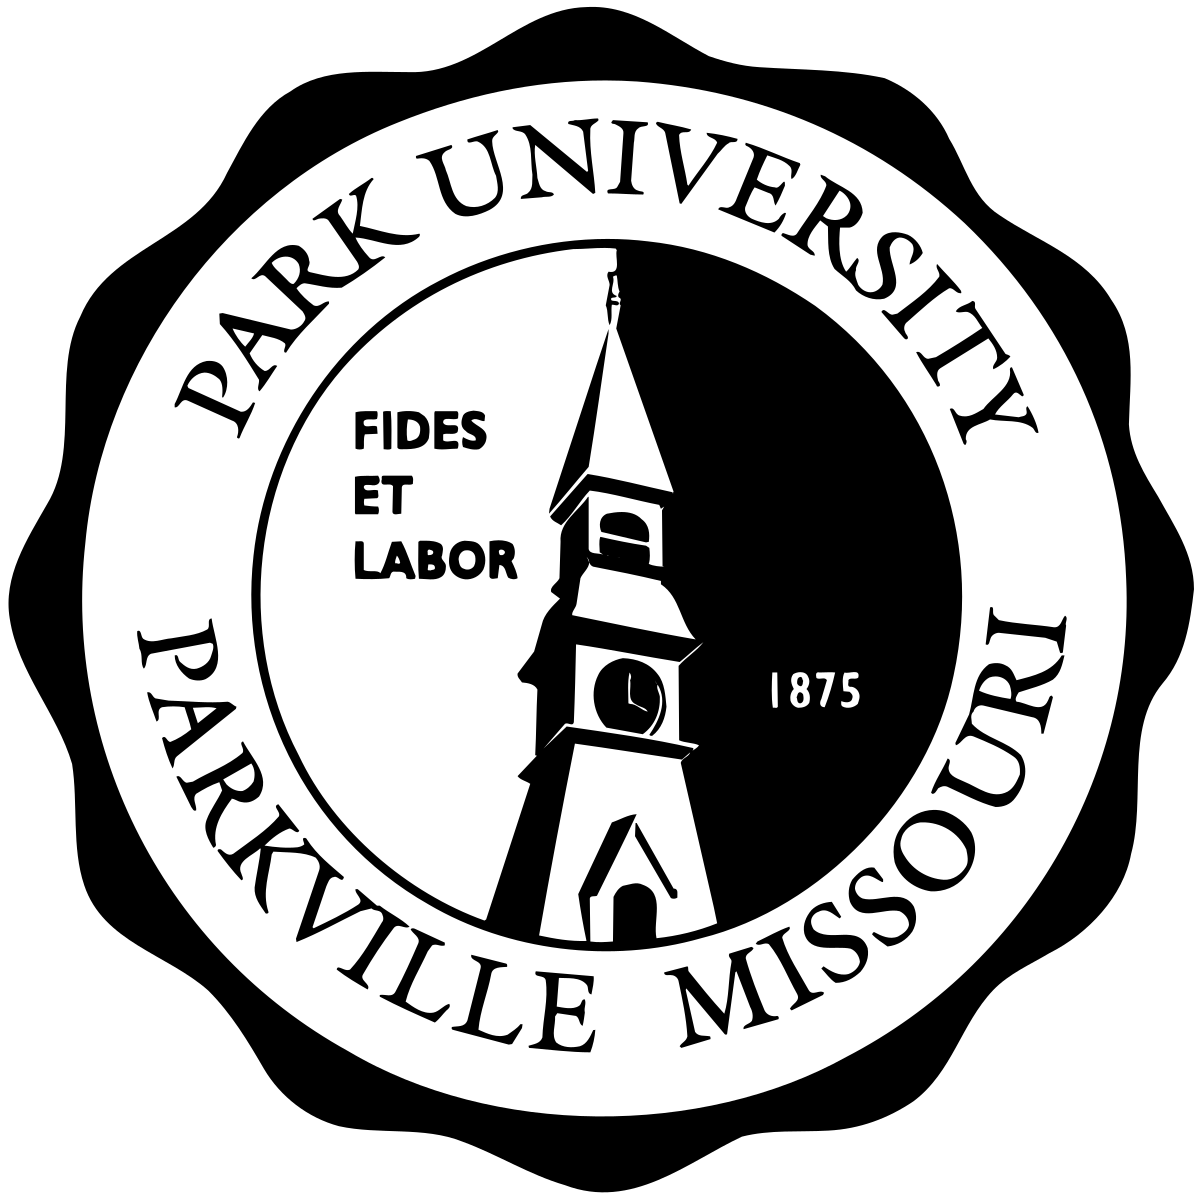 Park University - Wikipedia